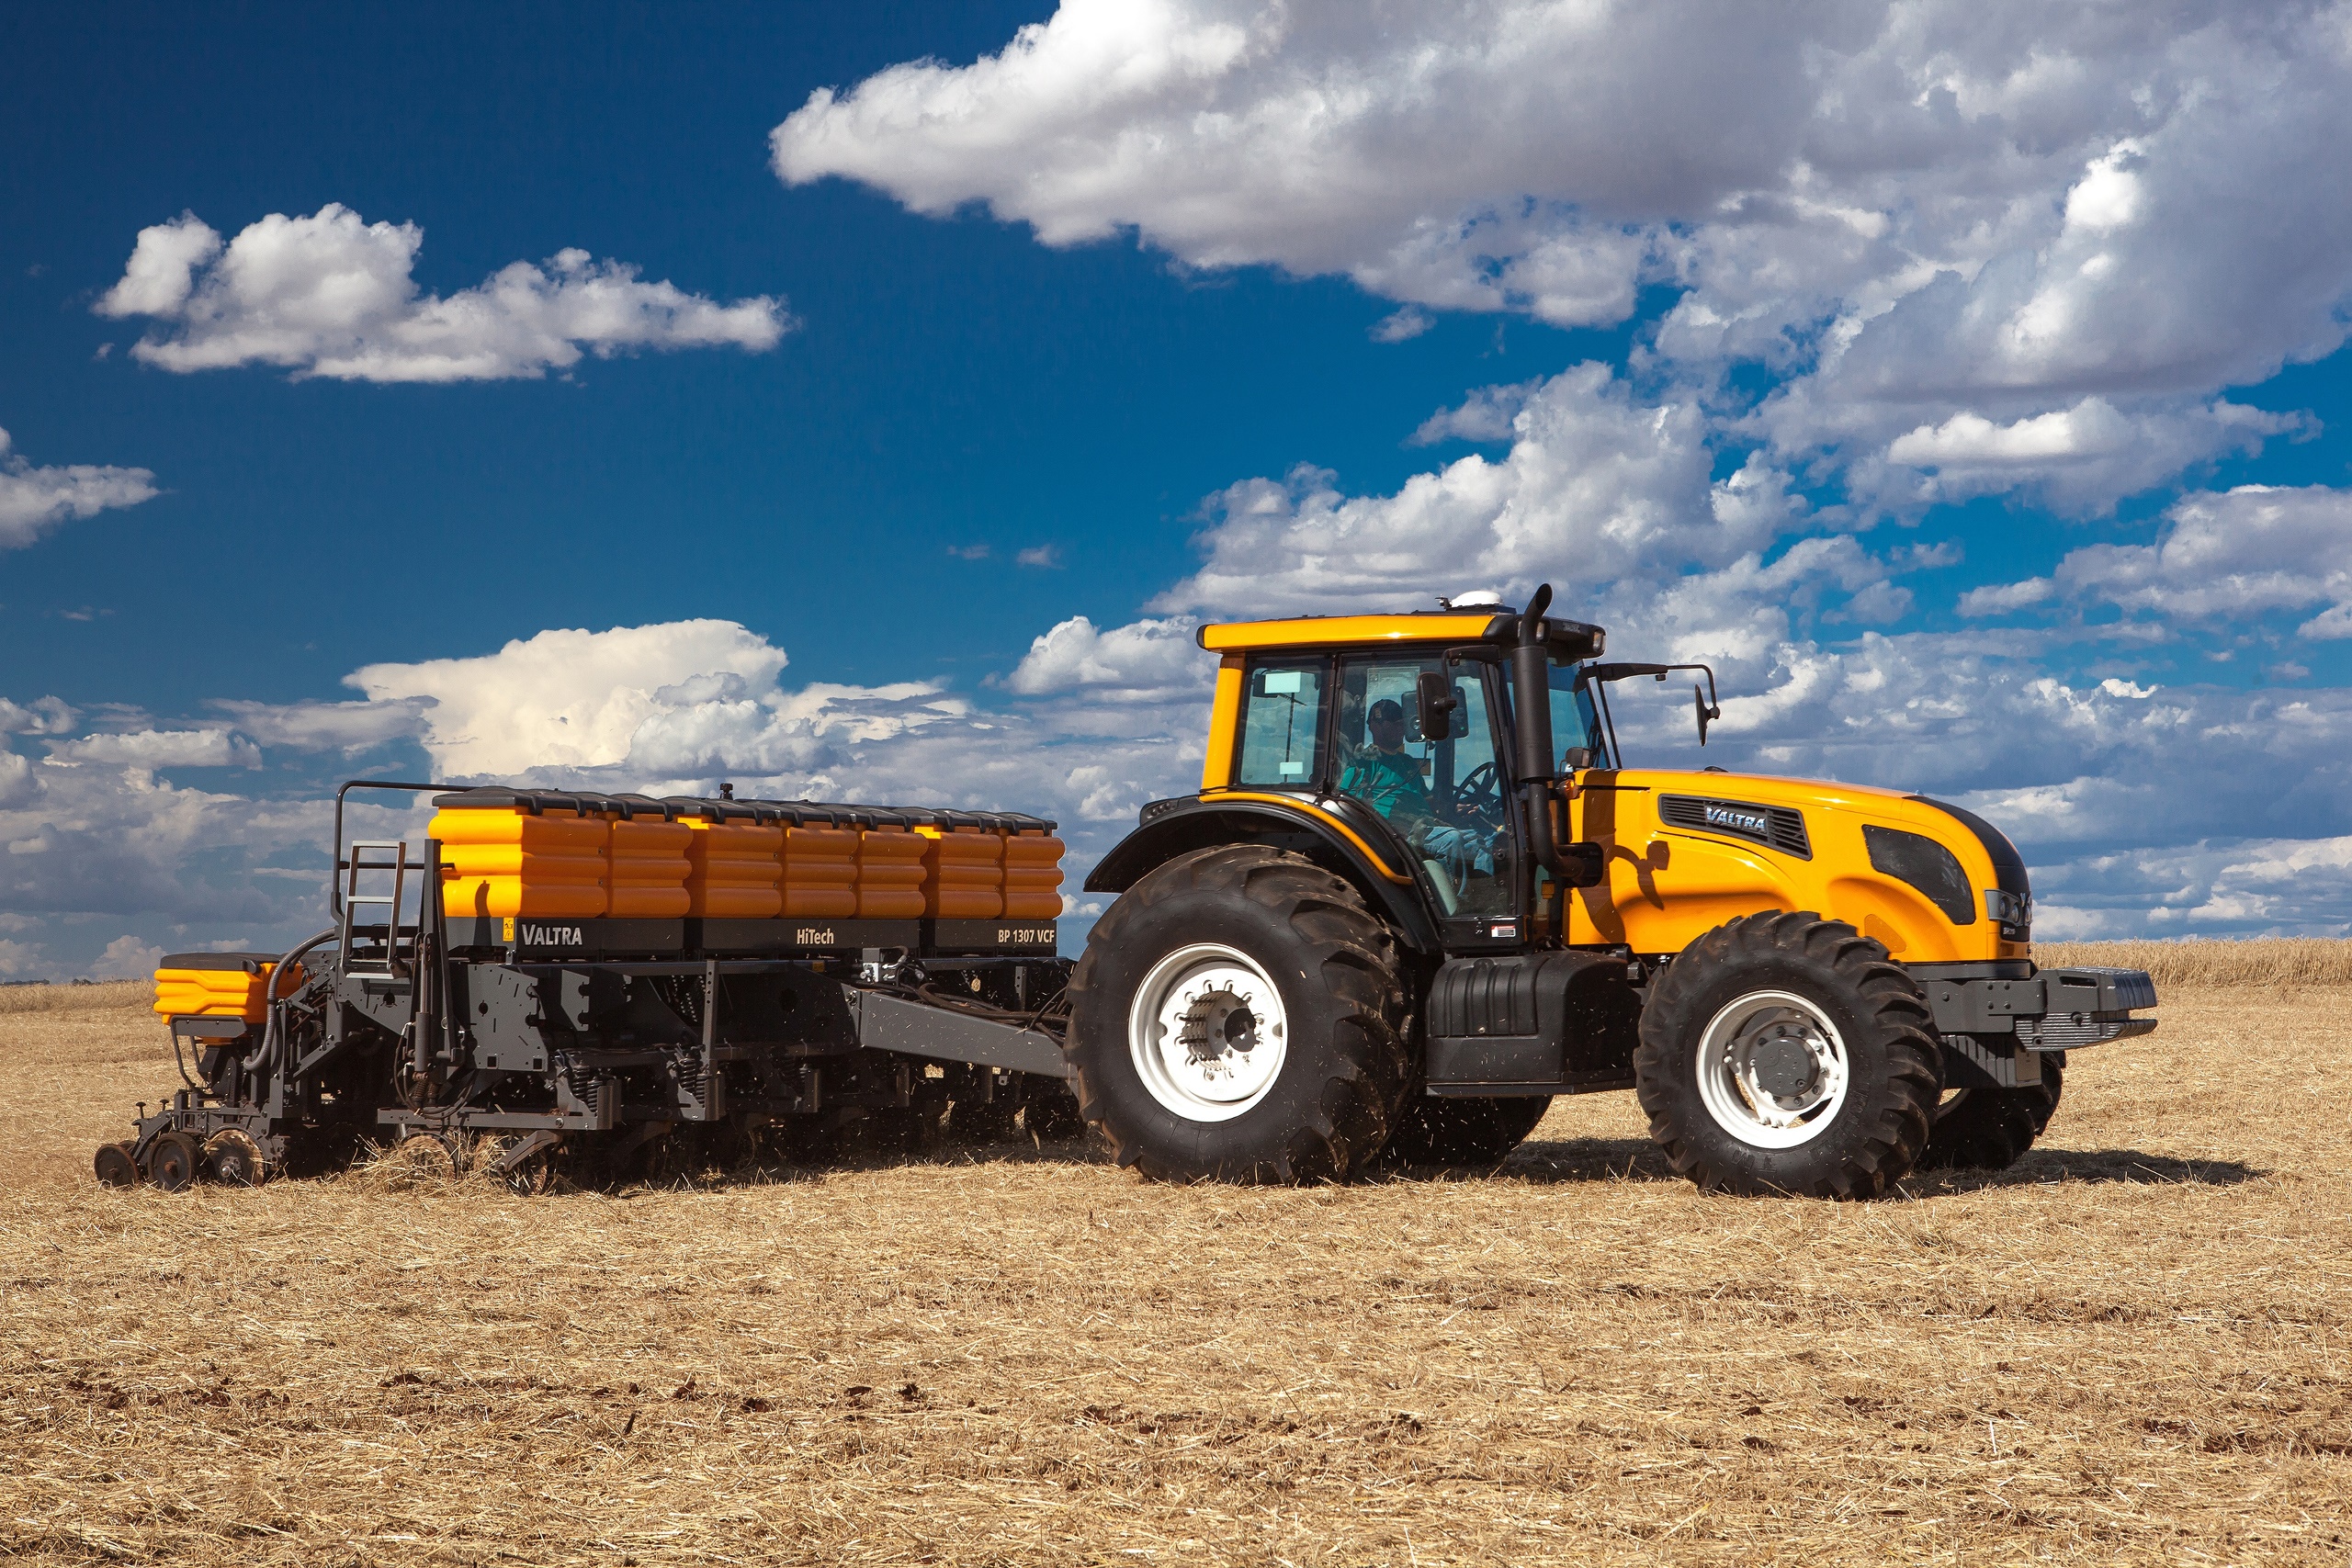 General 2560x1707 tractors vehicle outdoors field heavy equipment